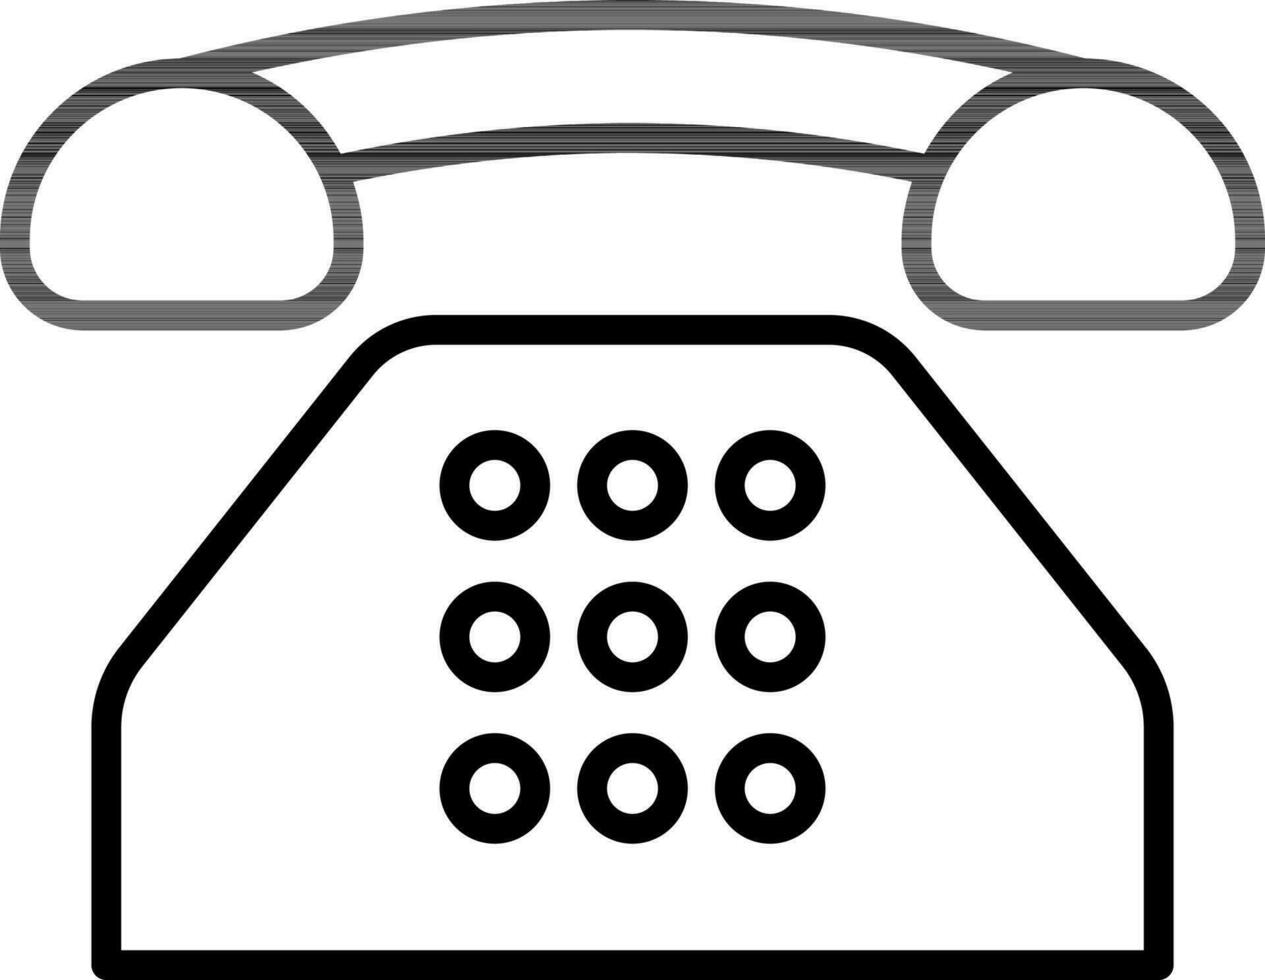 telefon ikon eller symbol i svart linje konst. vektor